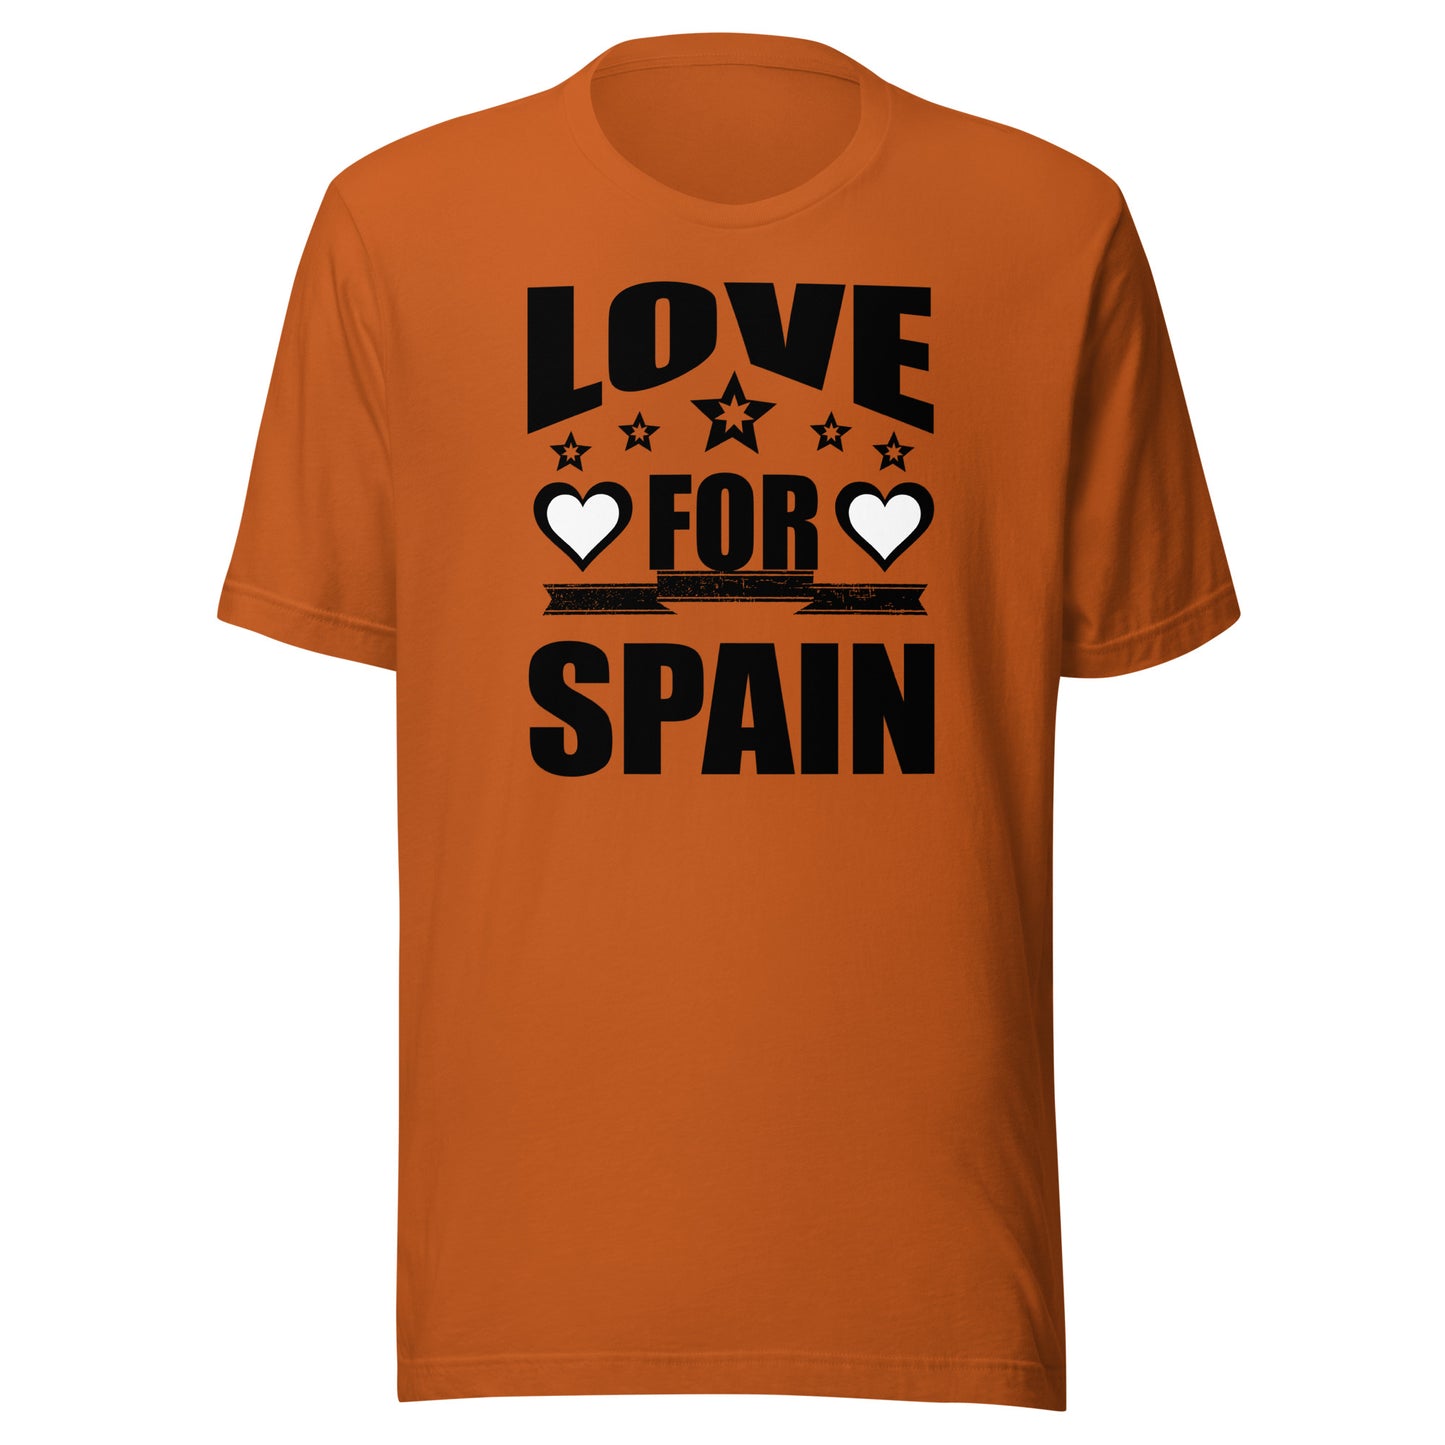 Spain Themed T-shirt Autumn Color